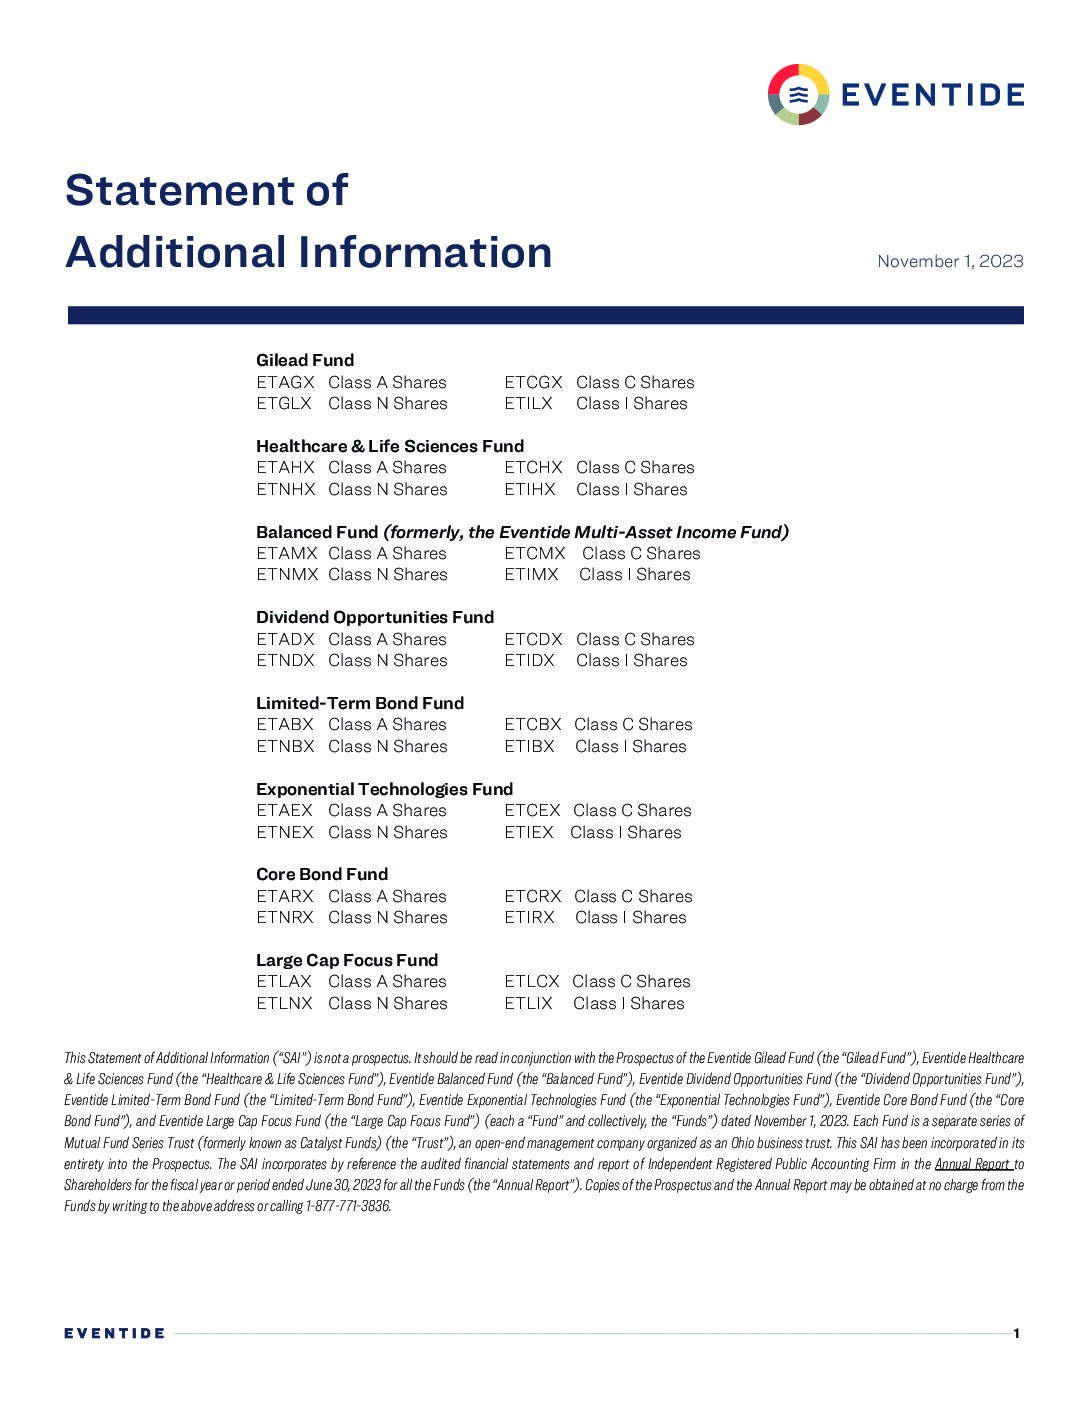 Statement of Additional Information (11/1/2023)